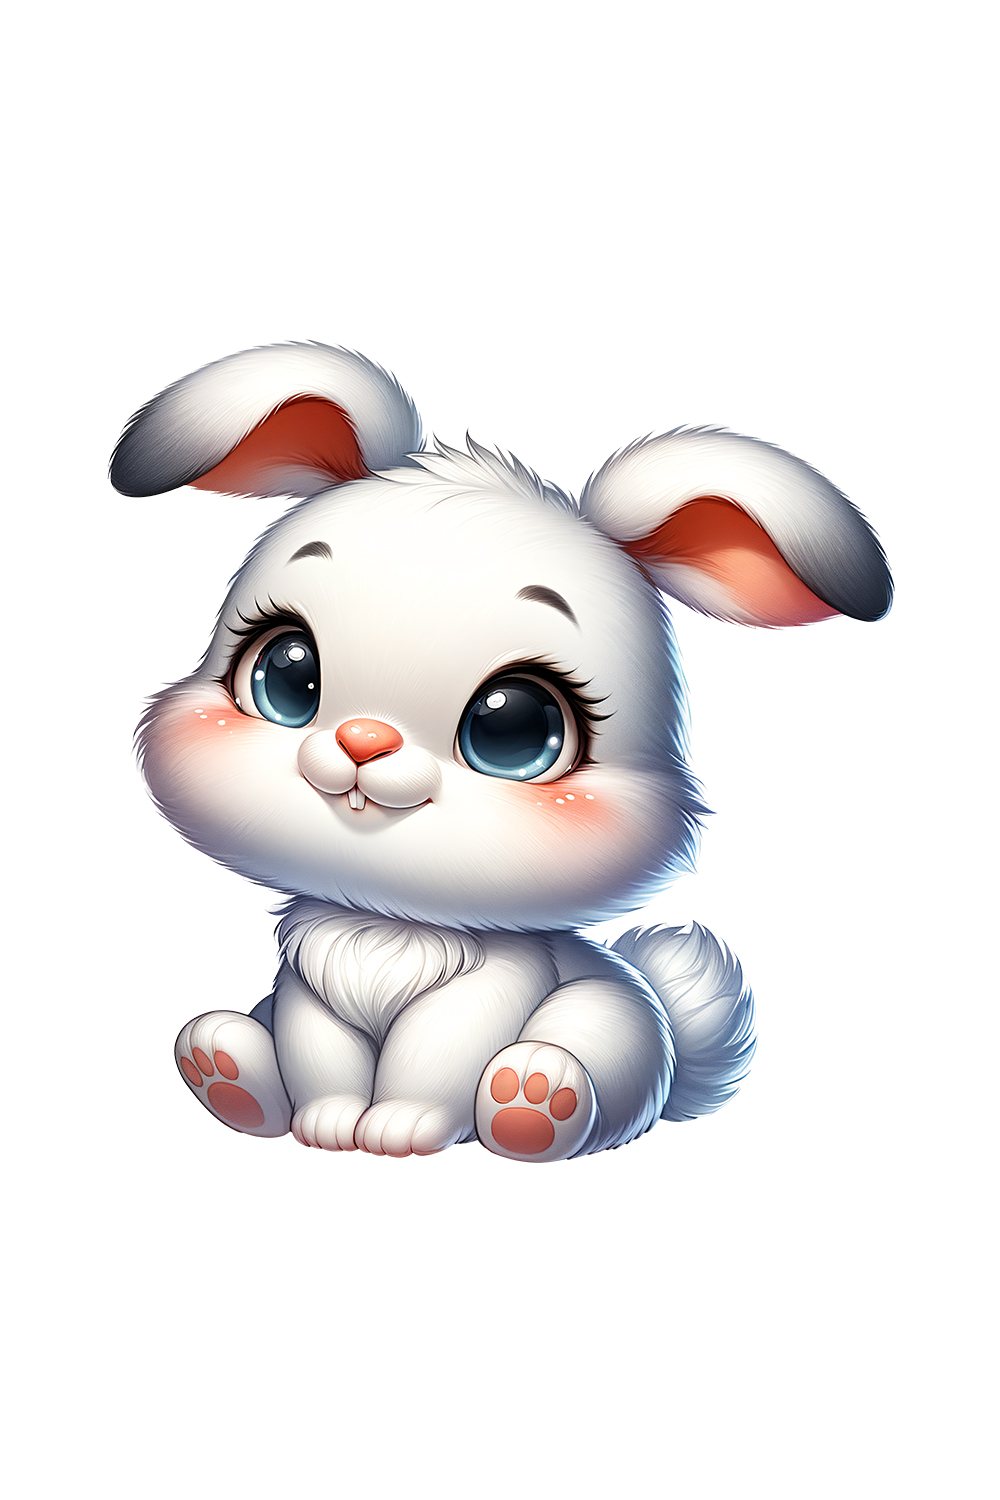 Cute Rabbit Clipart | Animals Clipart | PNG pinterest preview image.